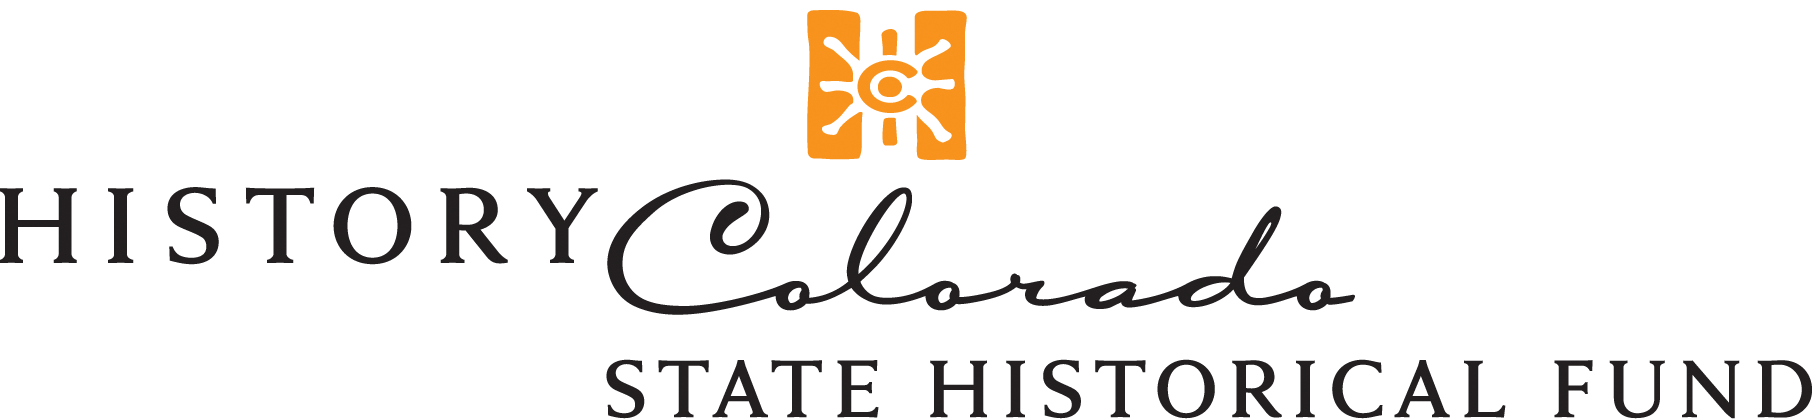 History Colorado — State Historical Fund logo